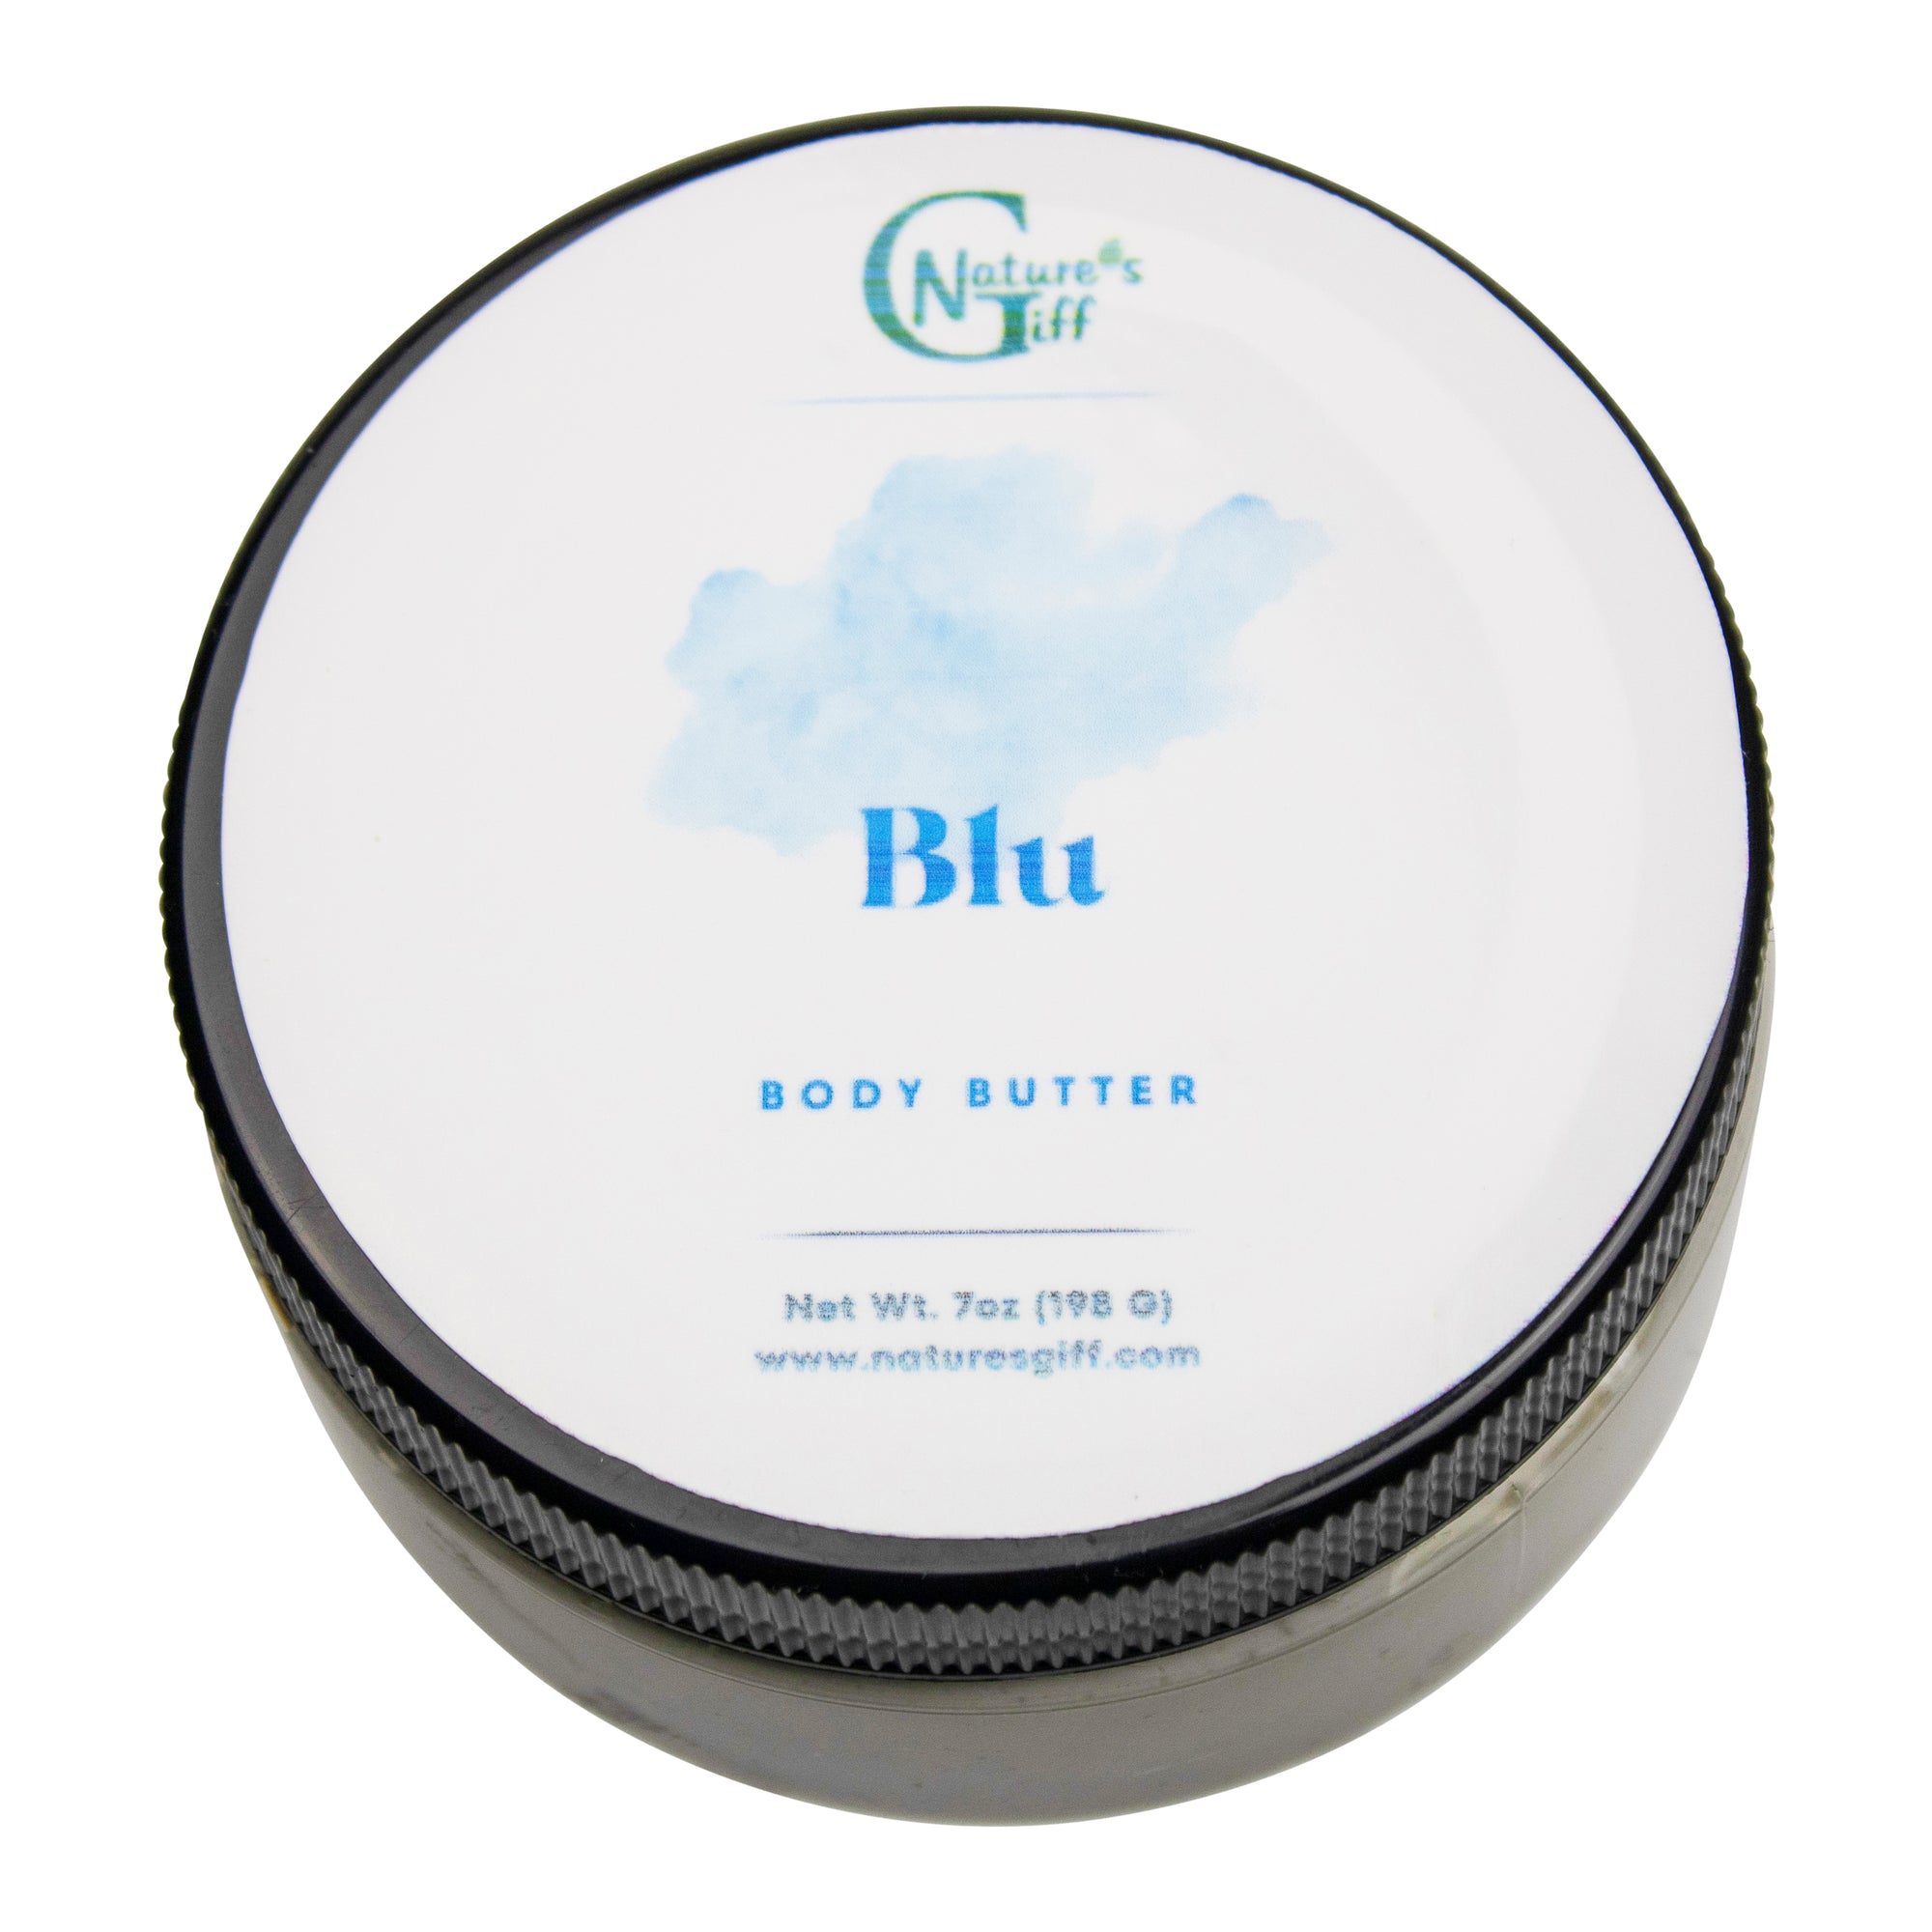 Blu Body Butter